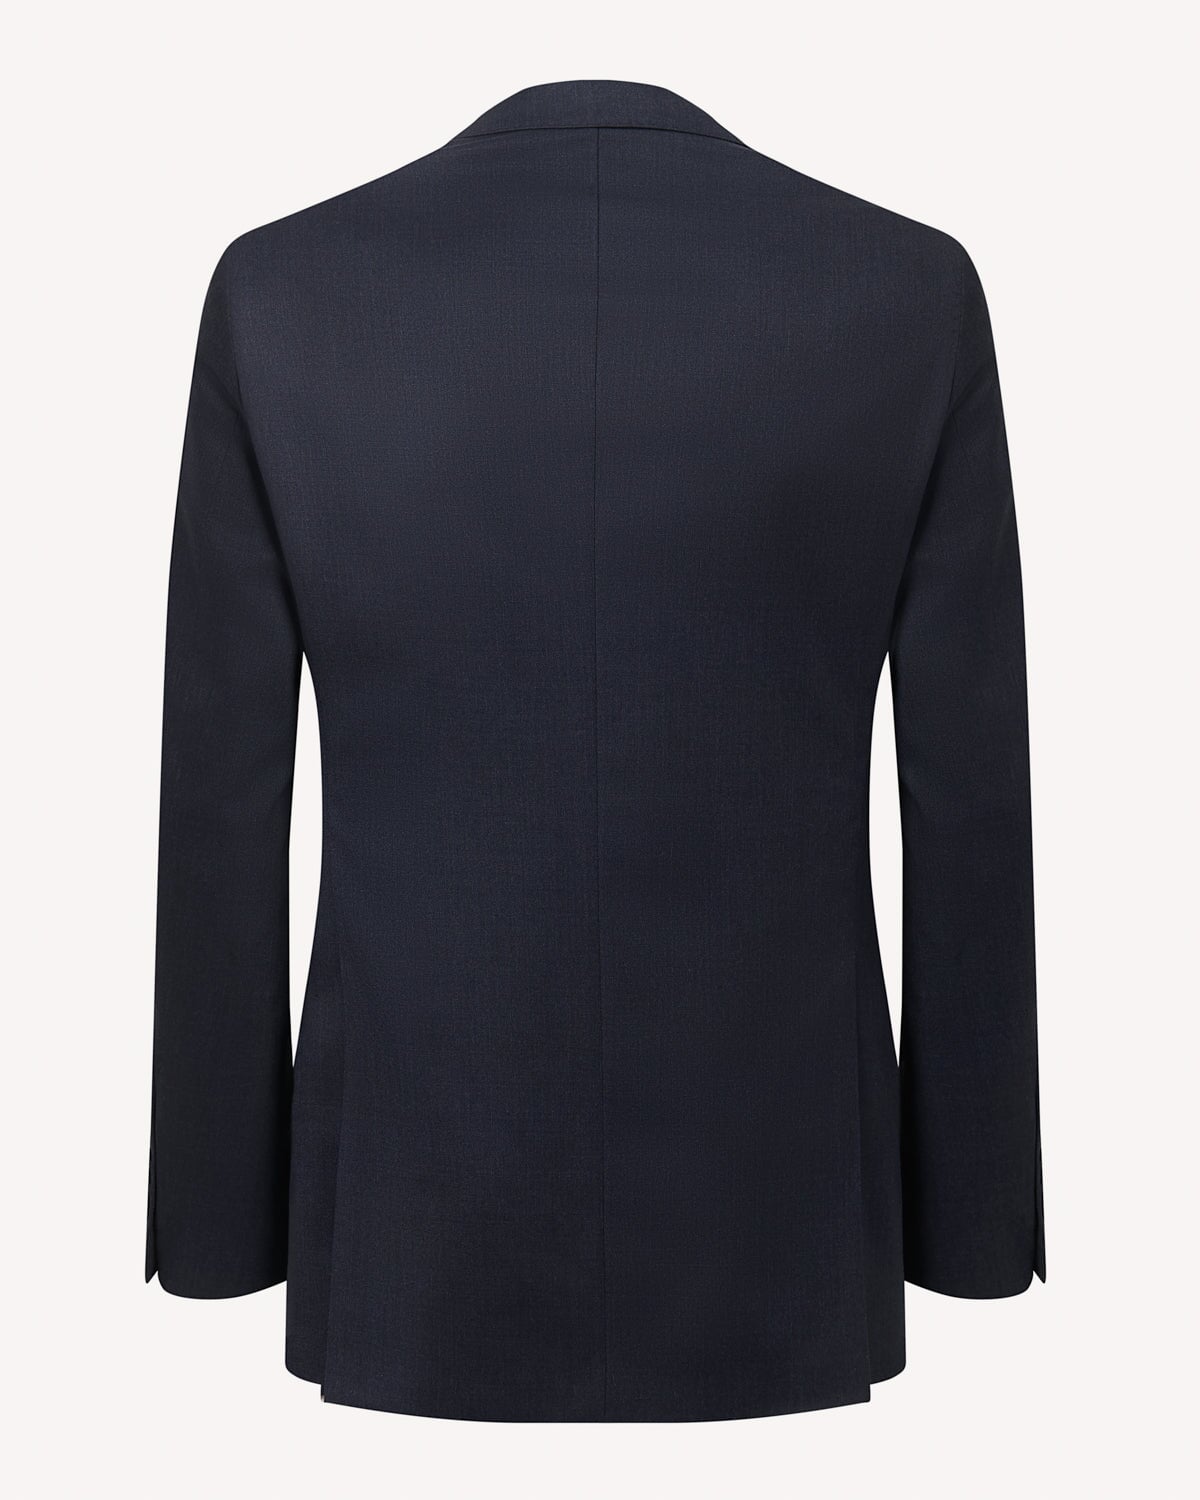 Kilgour Savile Row Tailoring SB1 KG Single Breasted Navy Suit